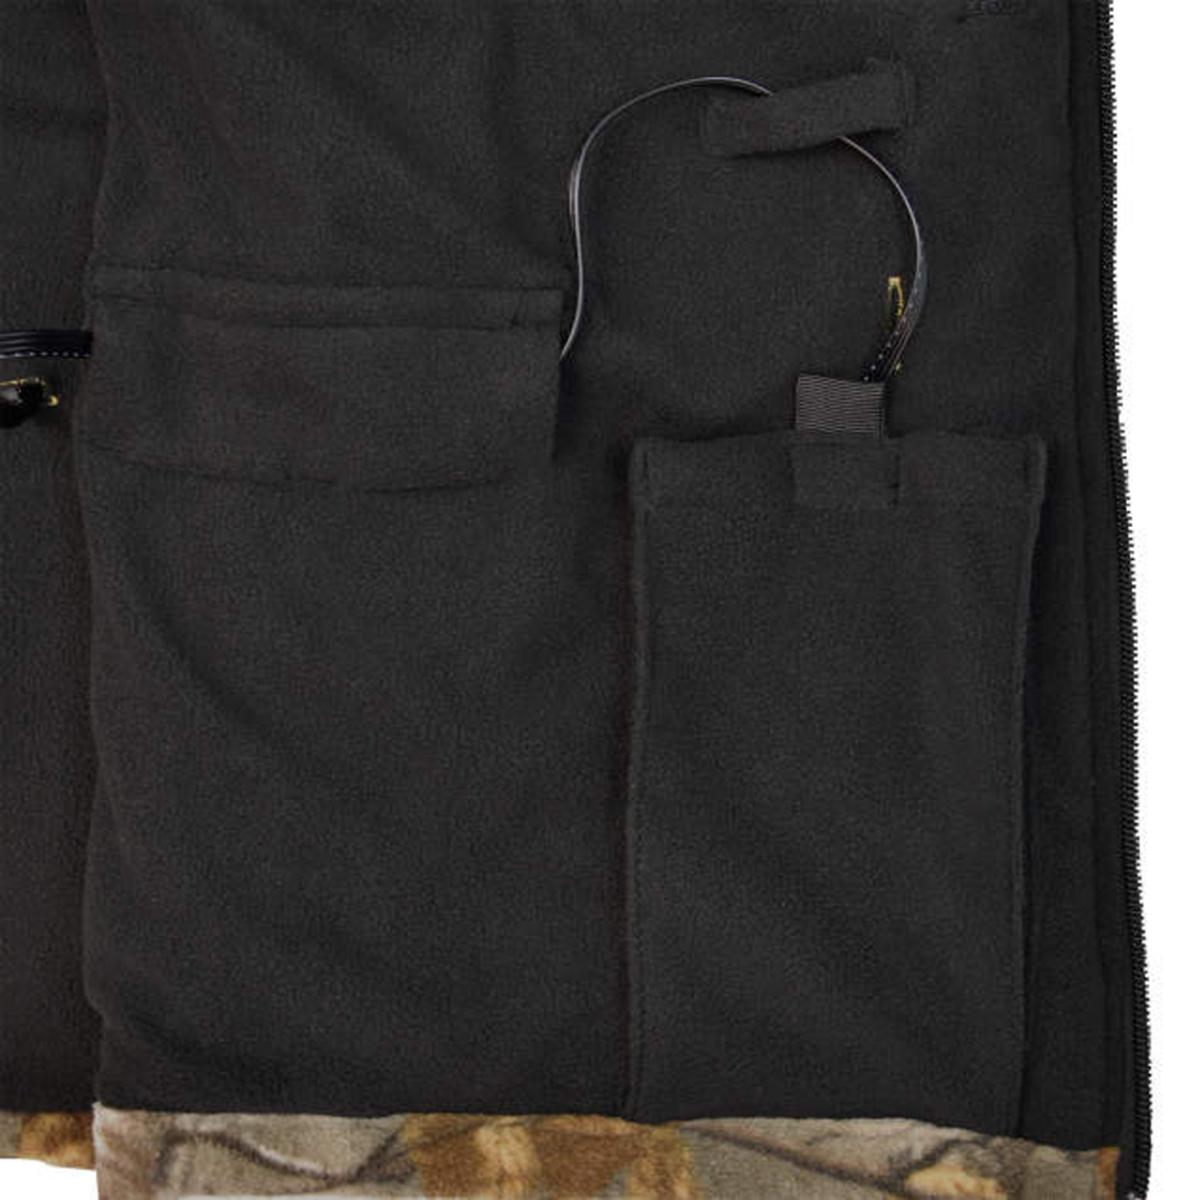 DeWalt Realtree Xtra Men's Camouflage Fleece Heated Vest with Battery